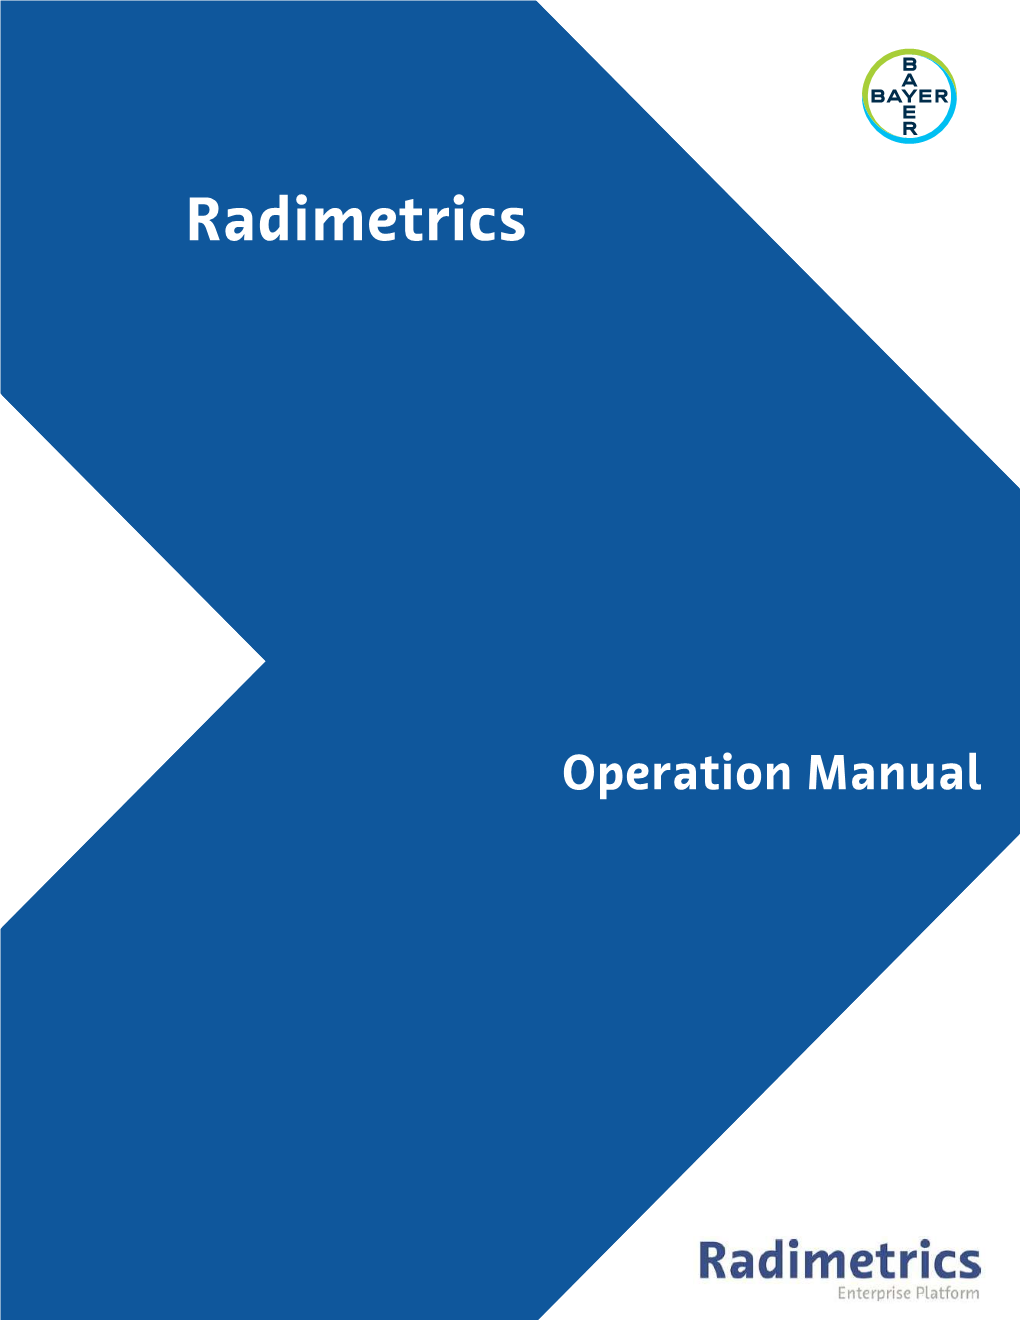 Radimetrics 3.0A Operation Manual